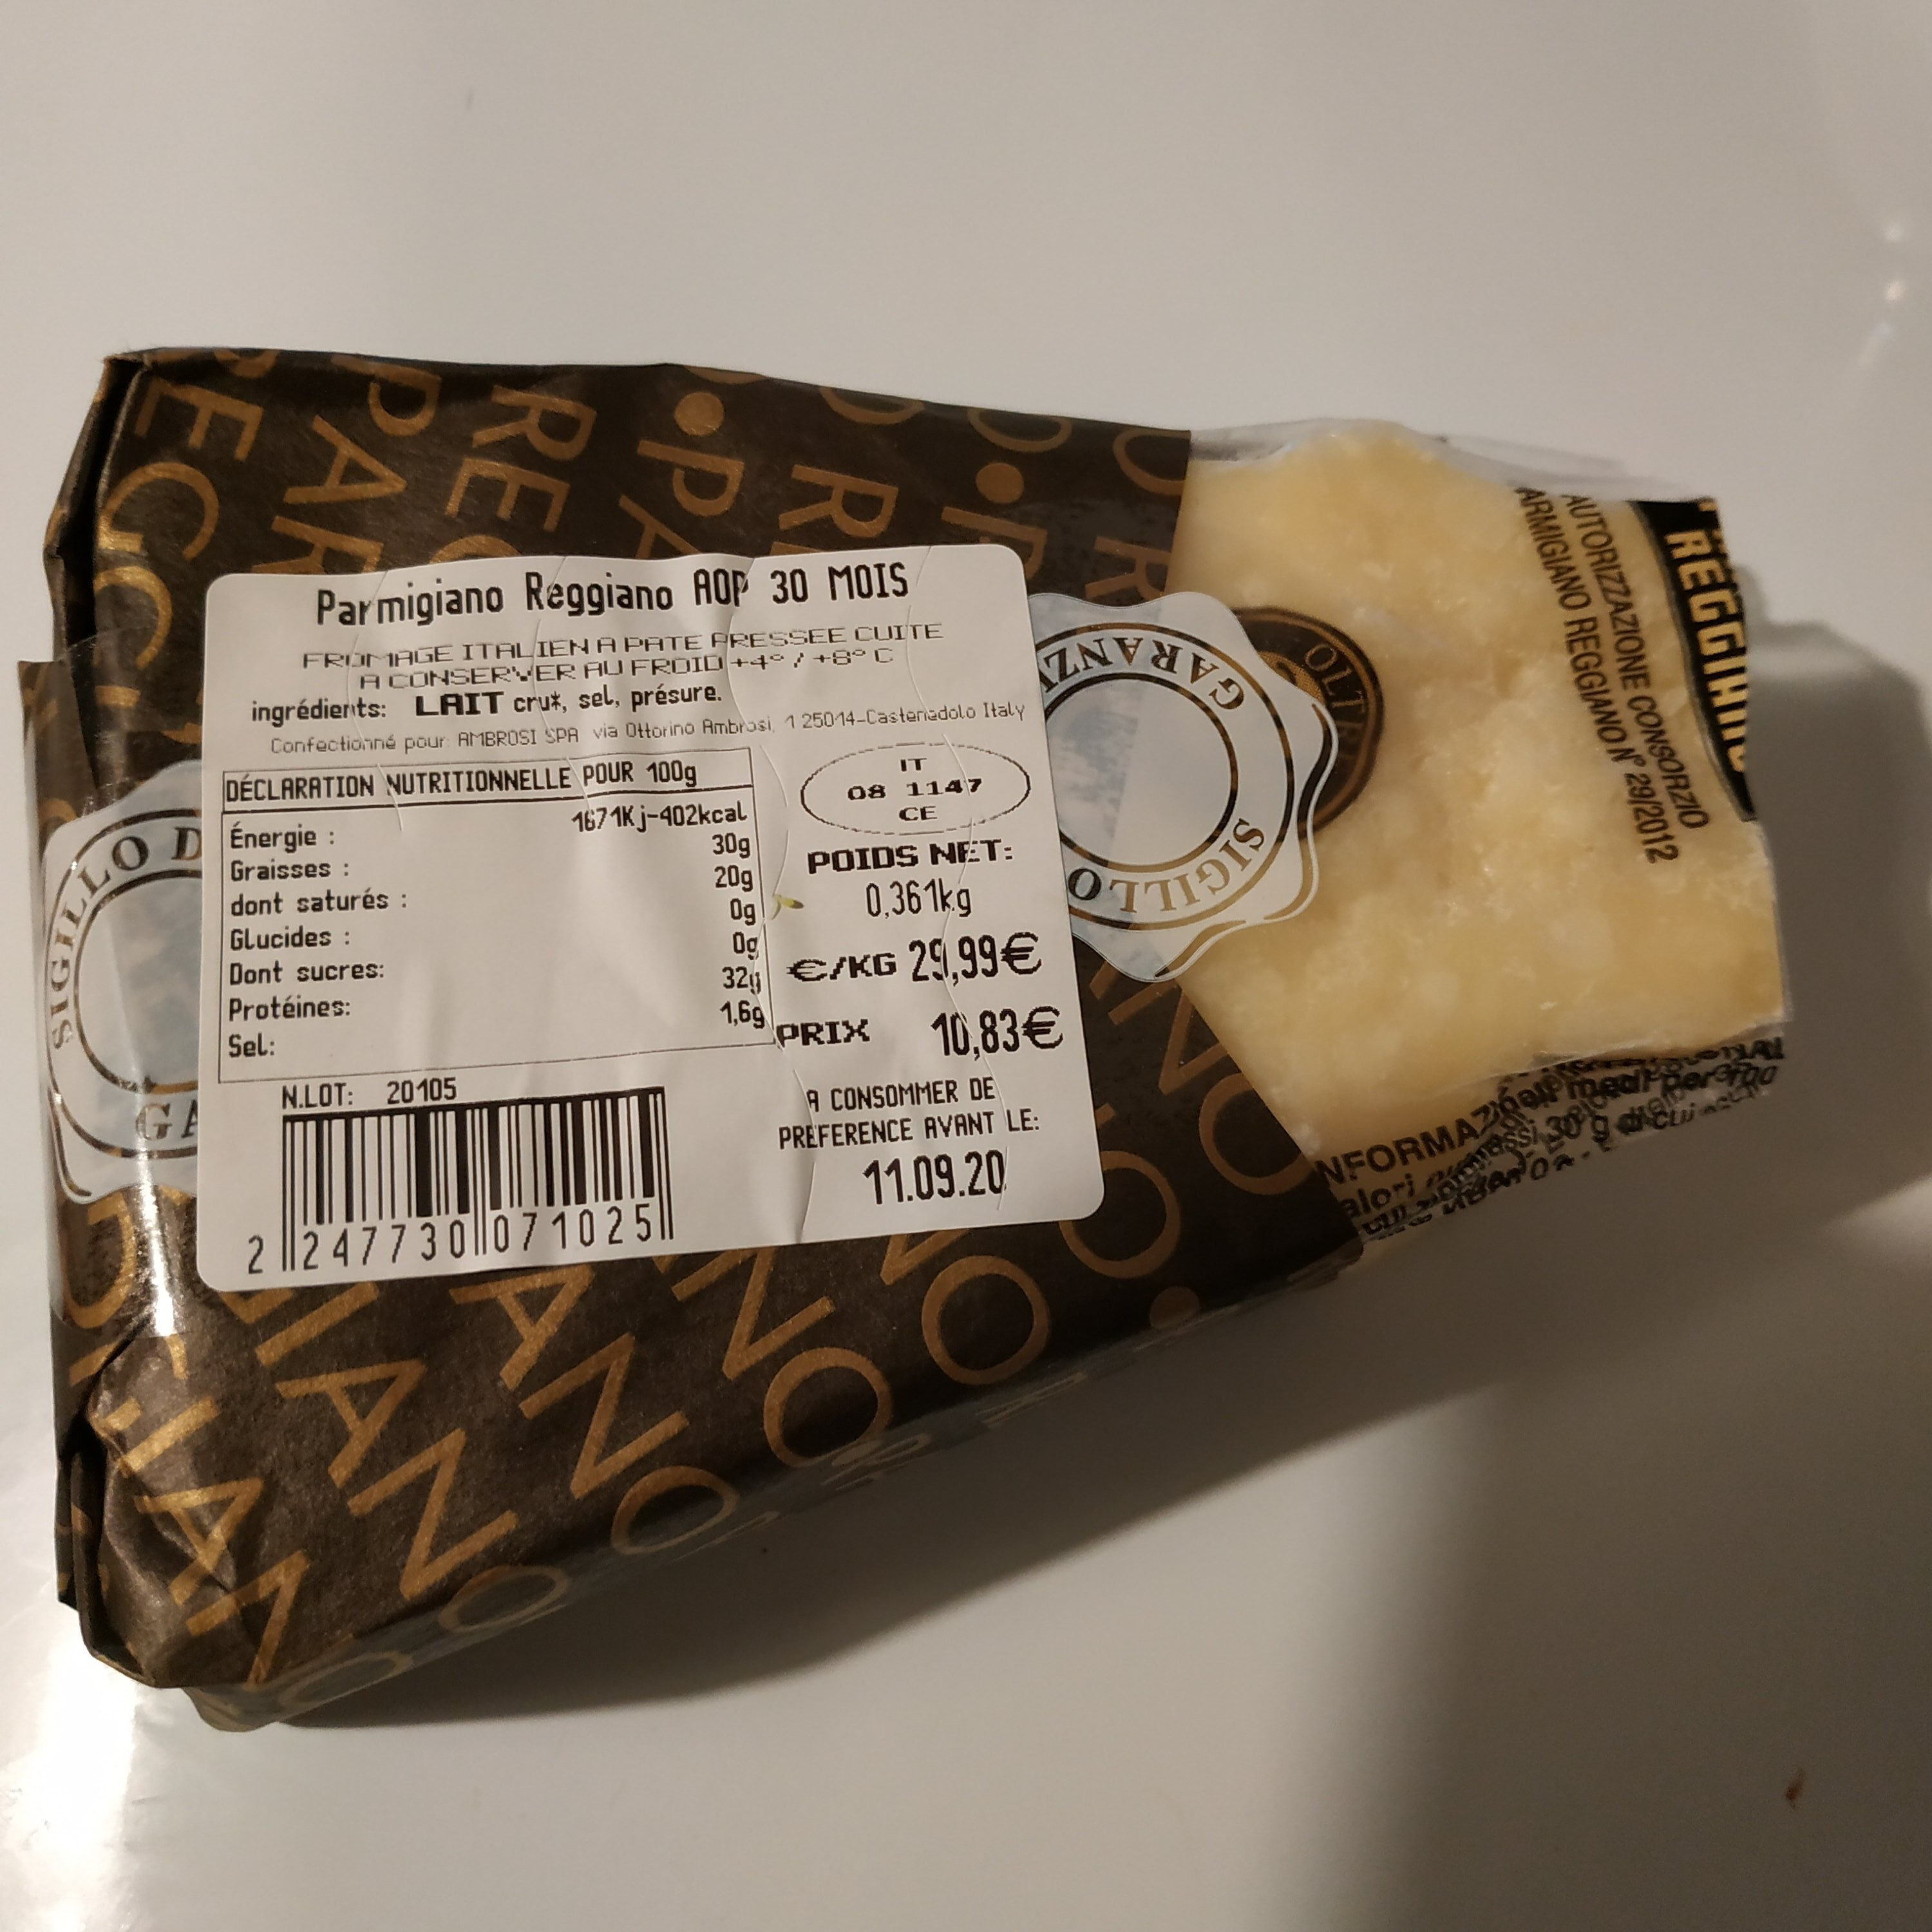 Parmigiano Reggiano AOP 30 mois - Product - fr